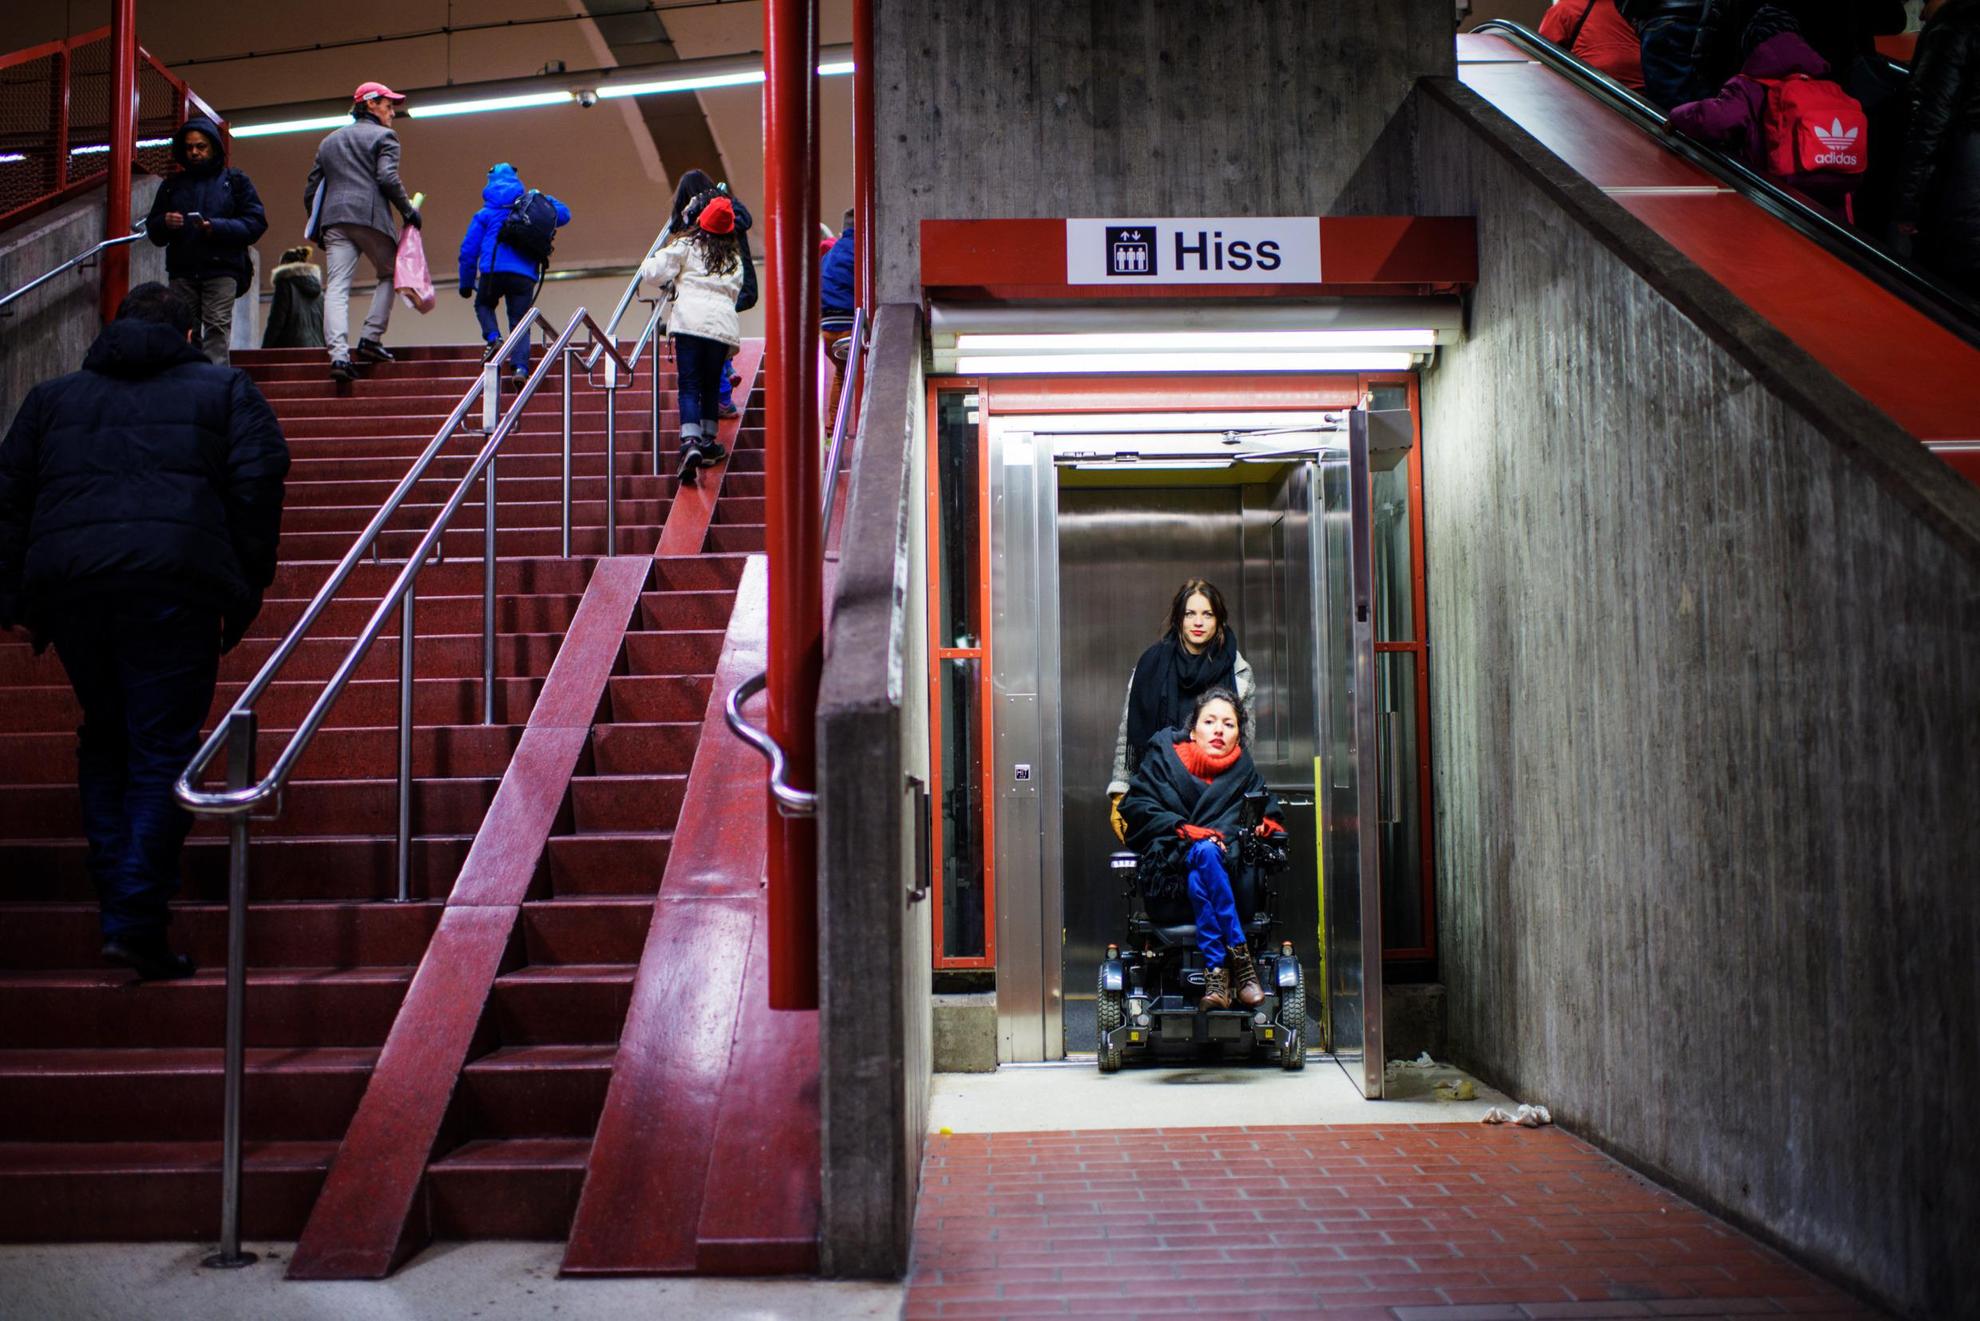 Accessible public transport